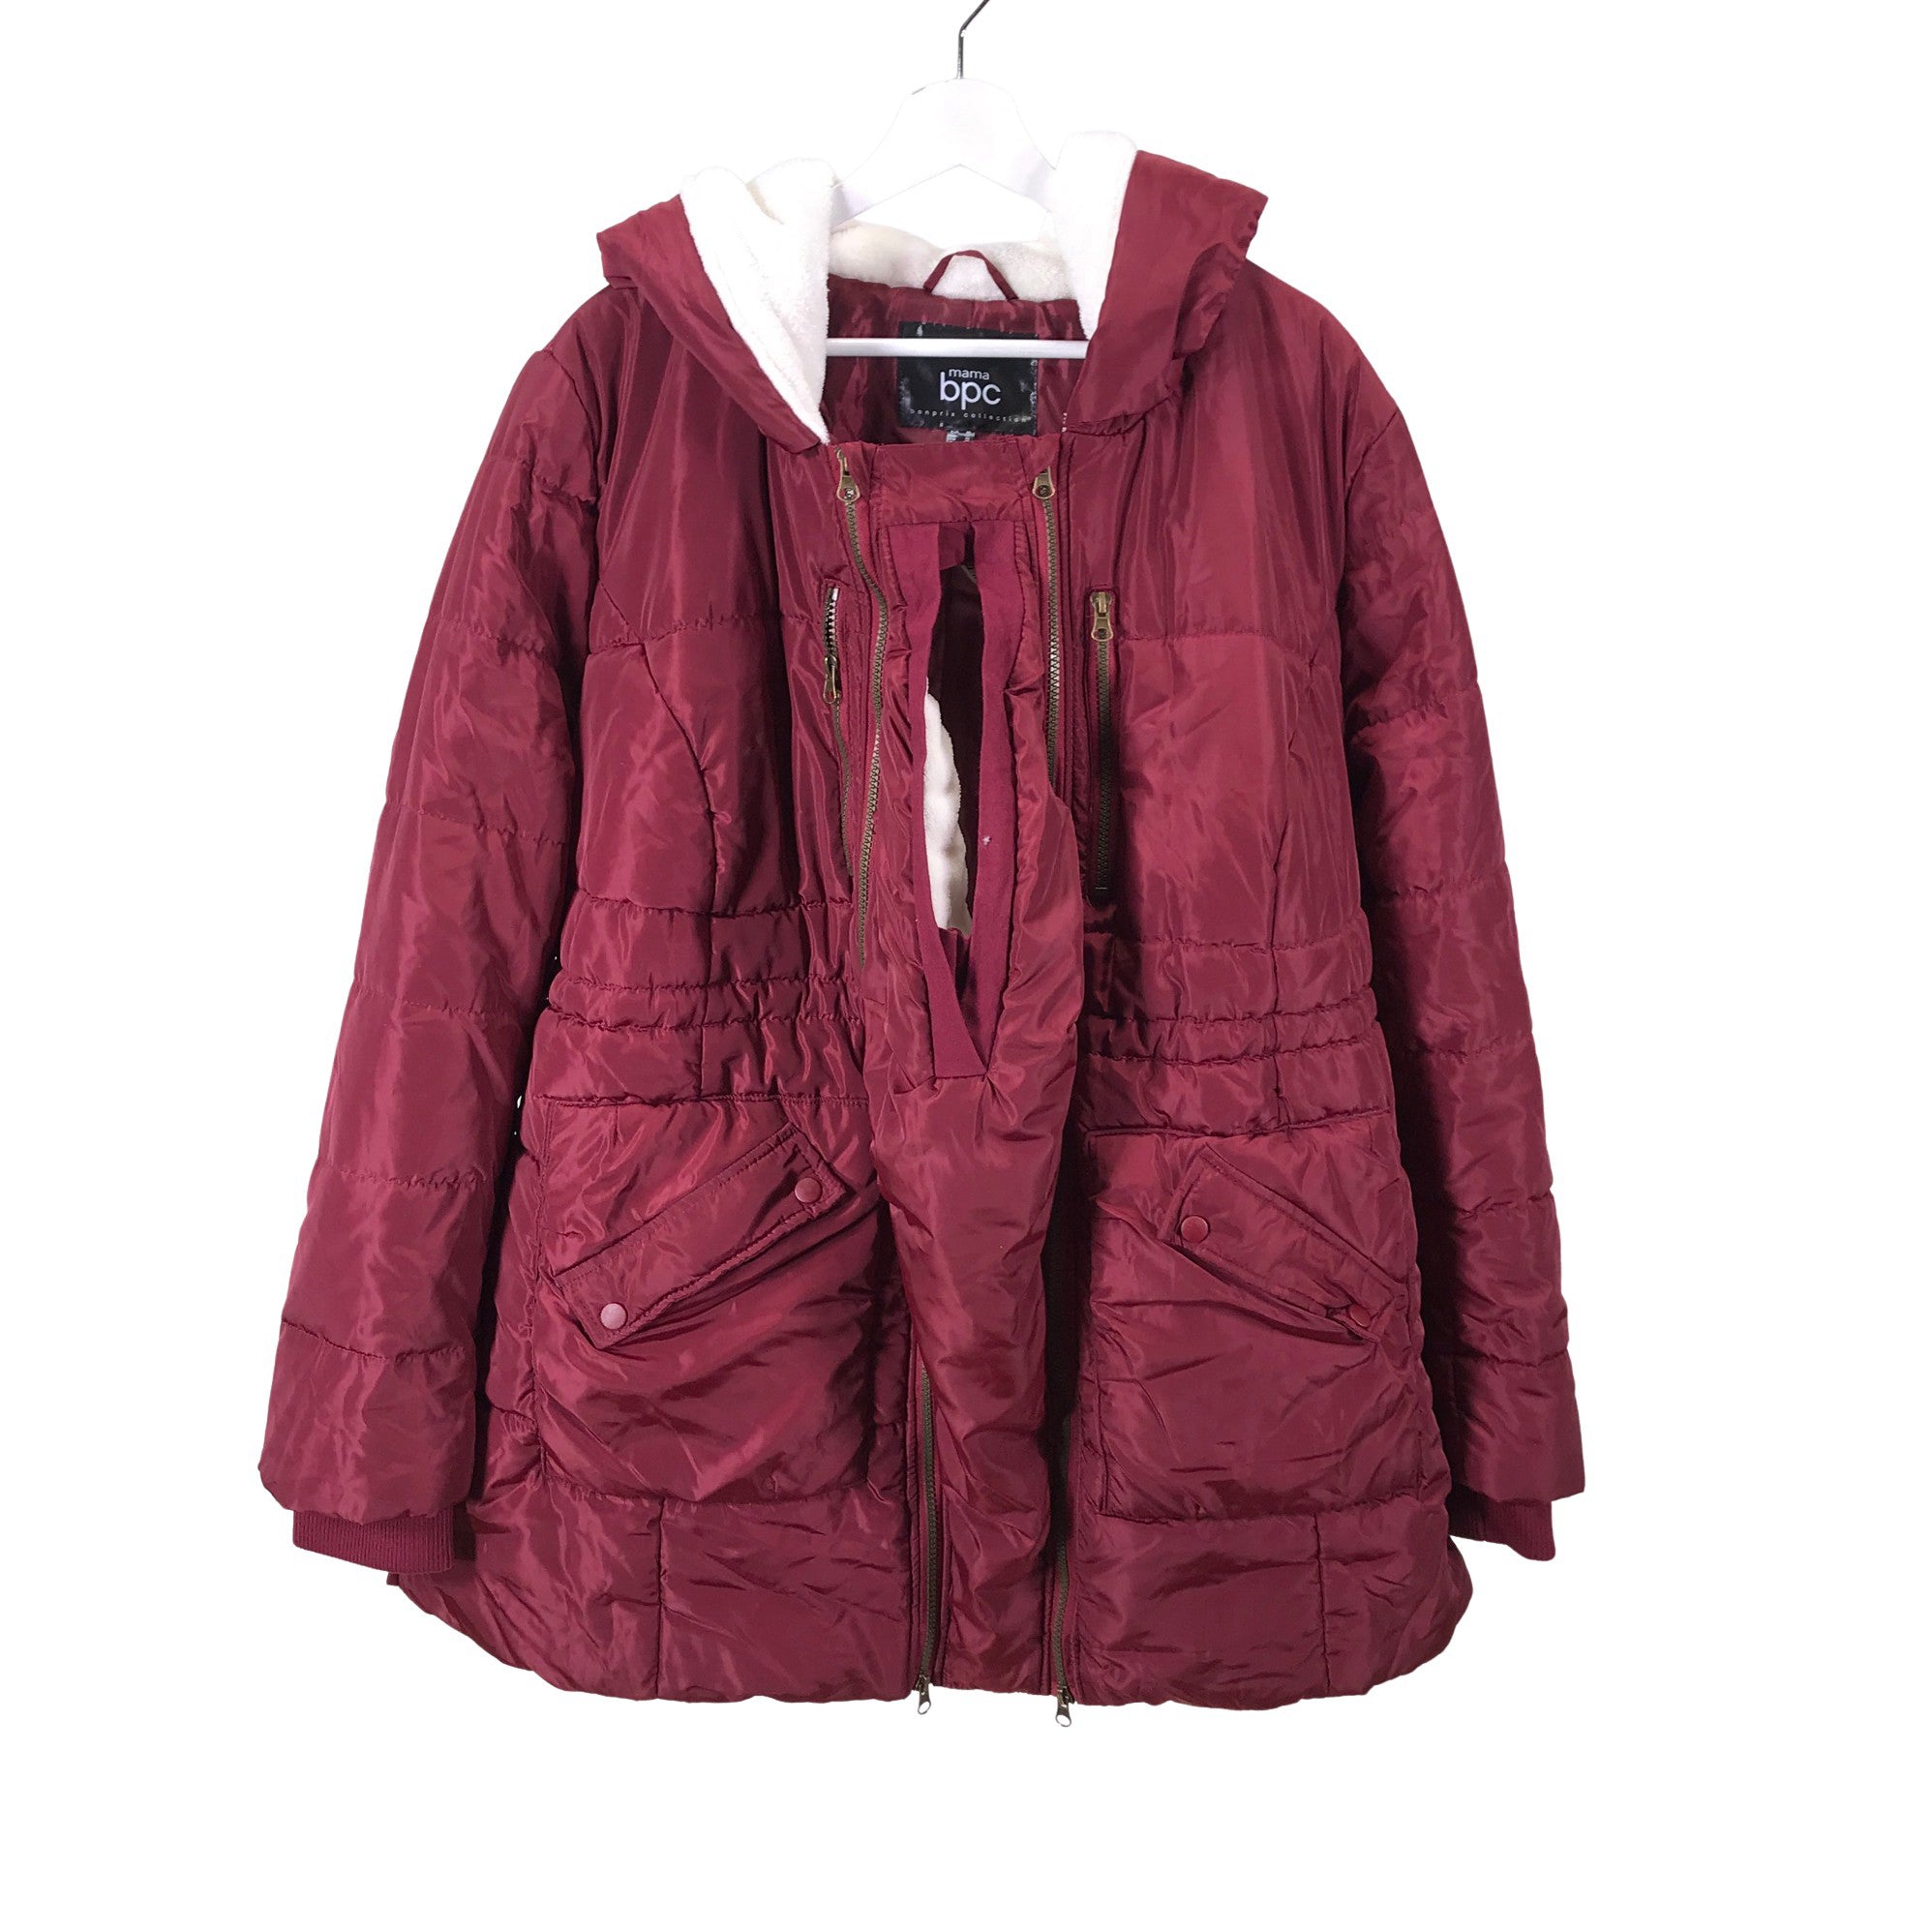 Women's Bonprix Collection Lightly padded jacket, size 50